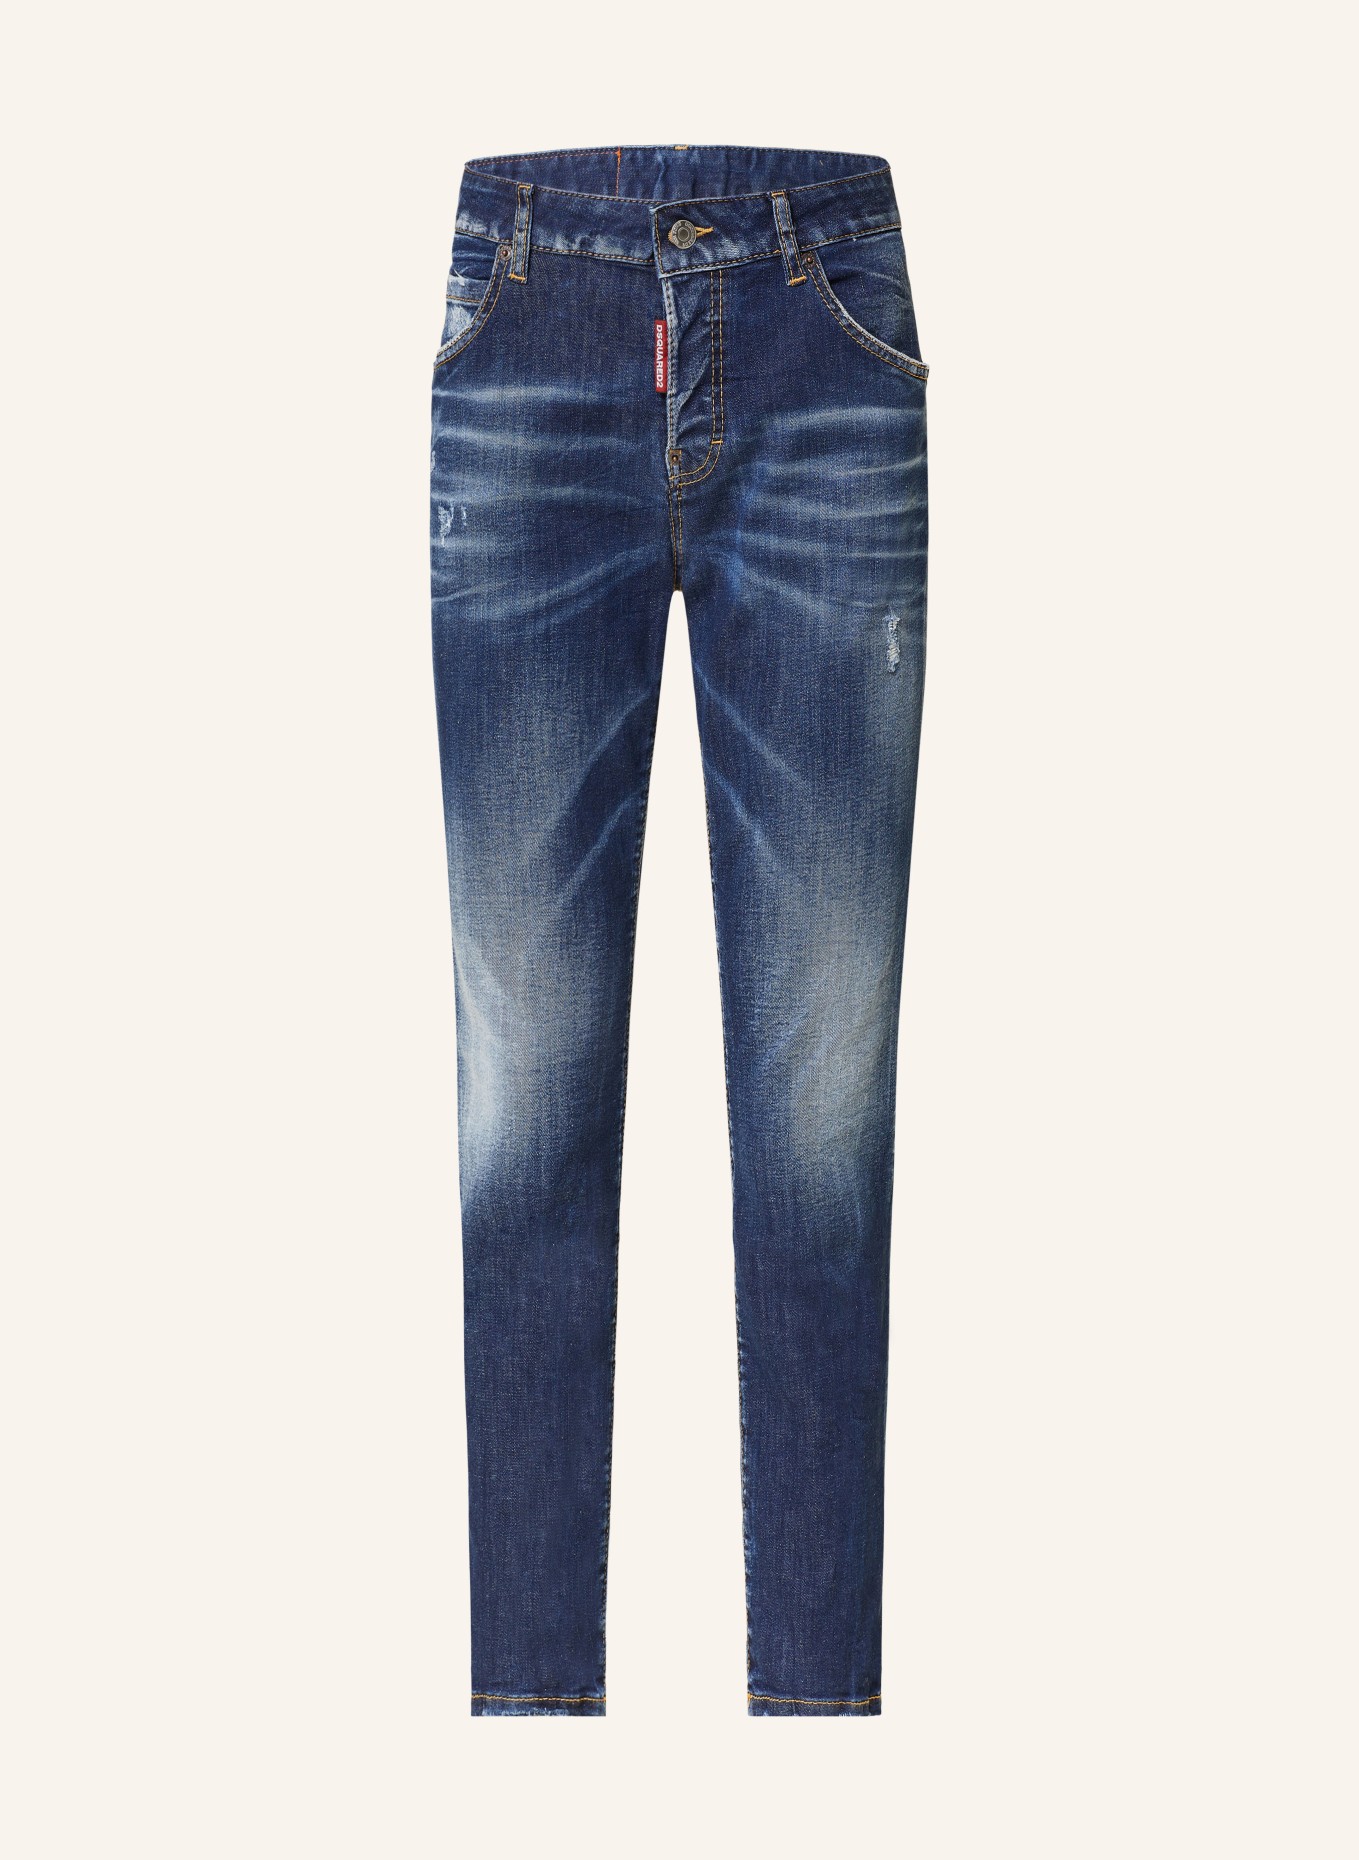 DSQUARED2 Skinny Jeans COOL GIRL, Farbe: 470 NAVY BLUE (Bild 1)